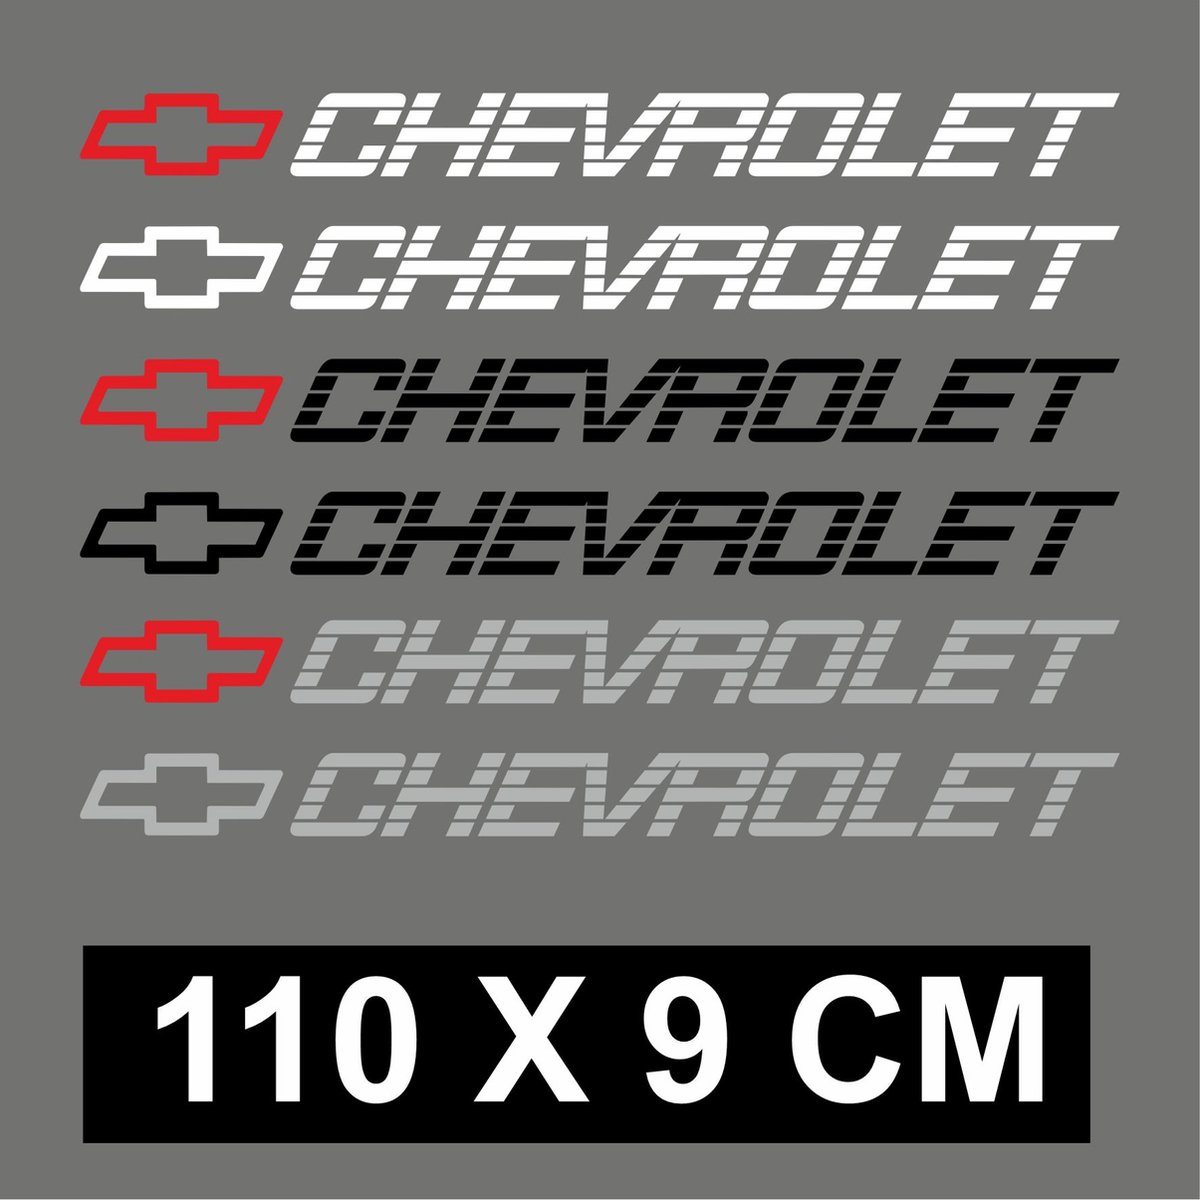 Chevrolet Pickup tailgate sticker met chevy logo 110x9cm - witte tekst en wit logo